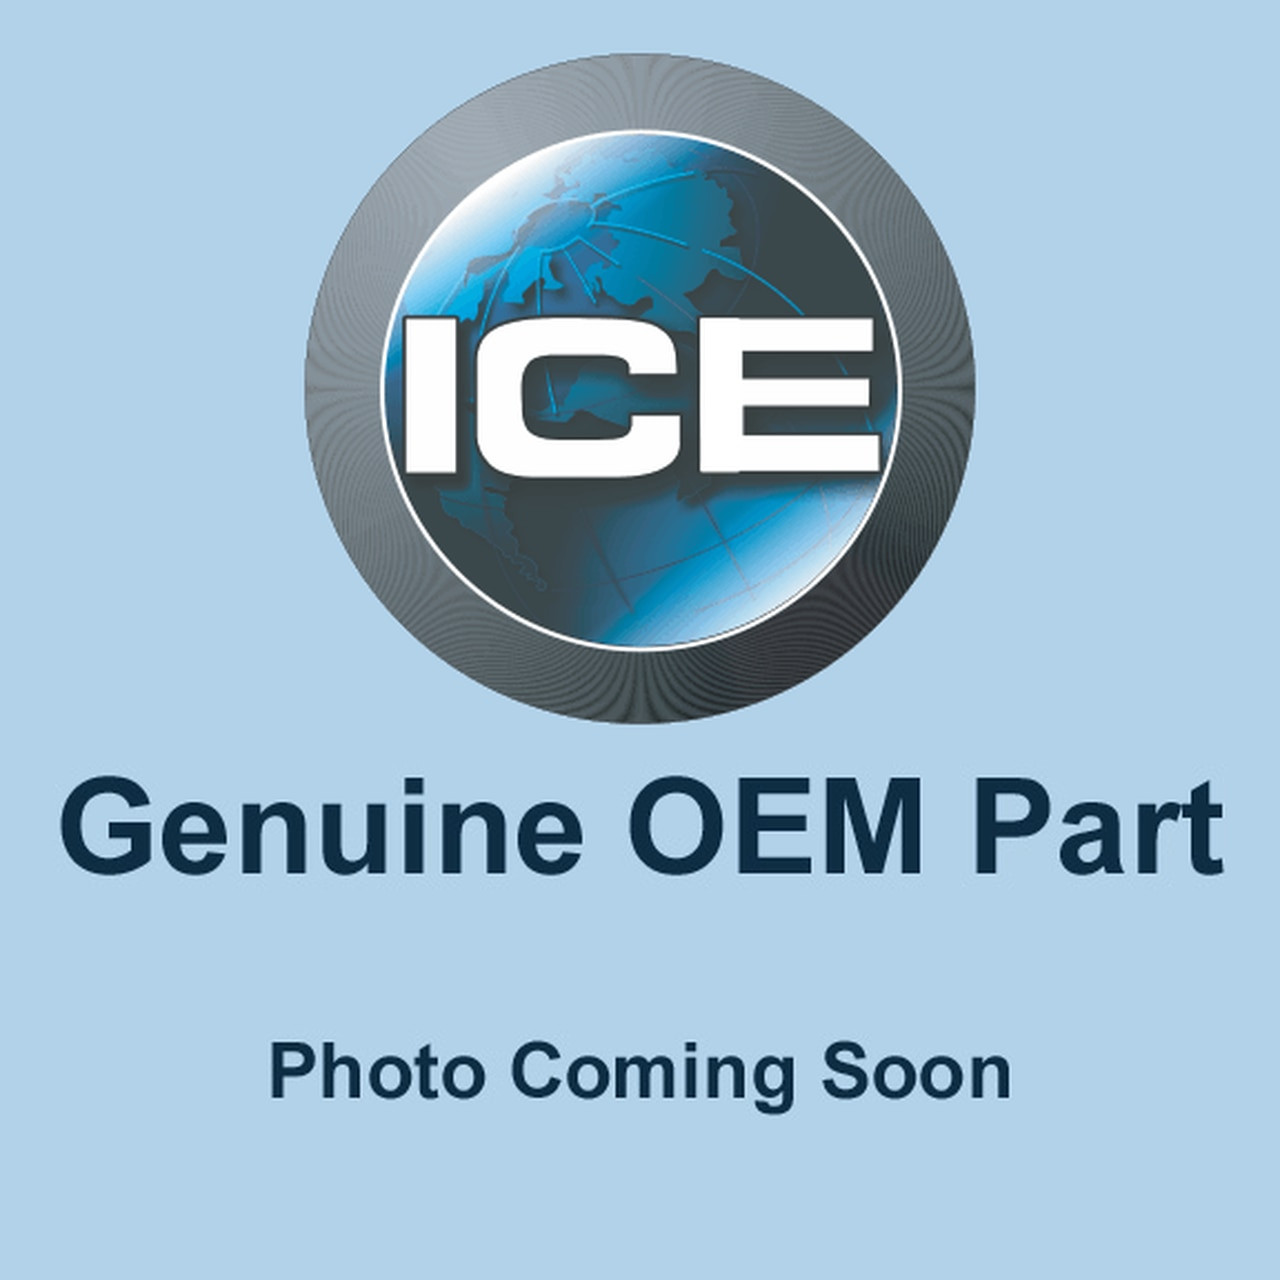 ICE 2310130 - Genuine OEM Clamp, Pick-Up Tool